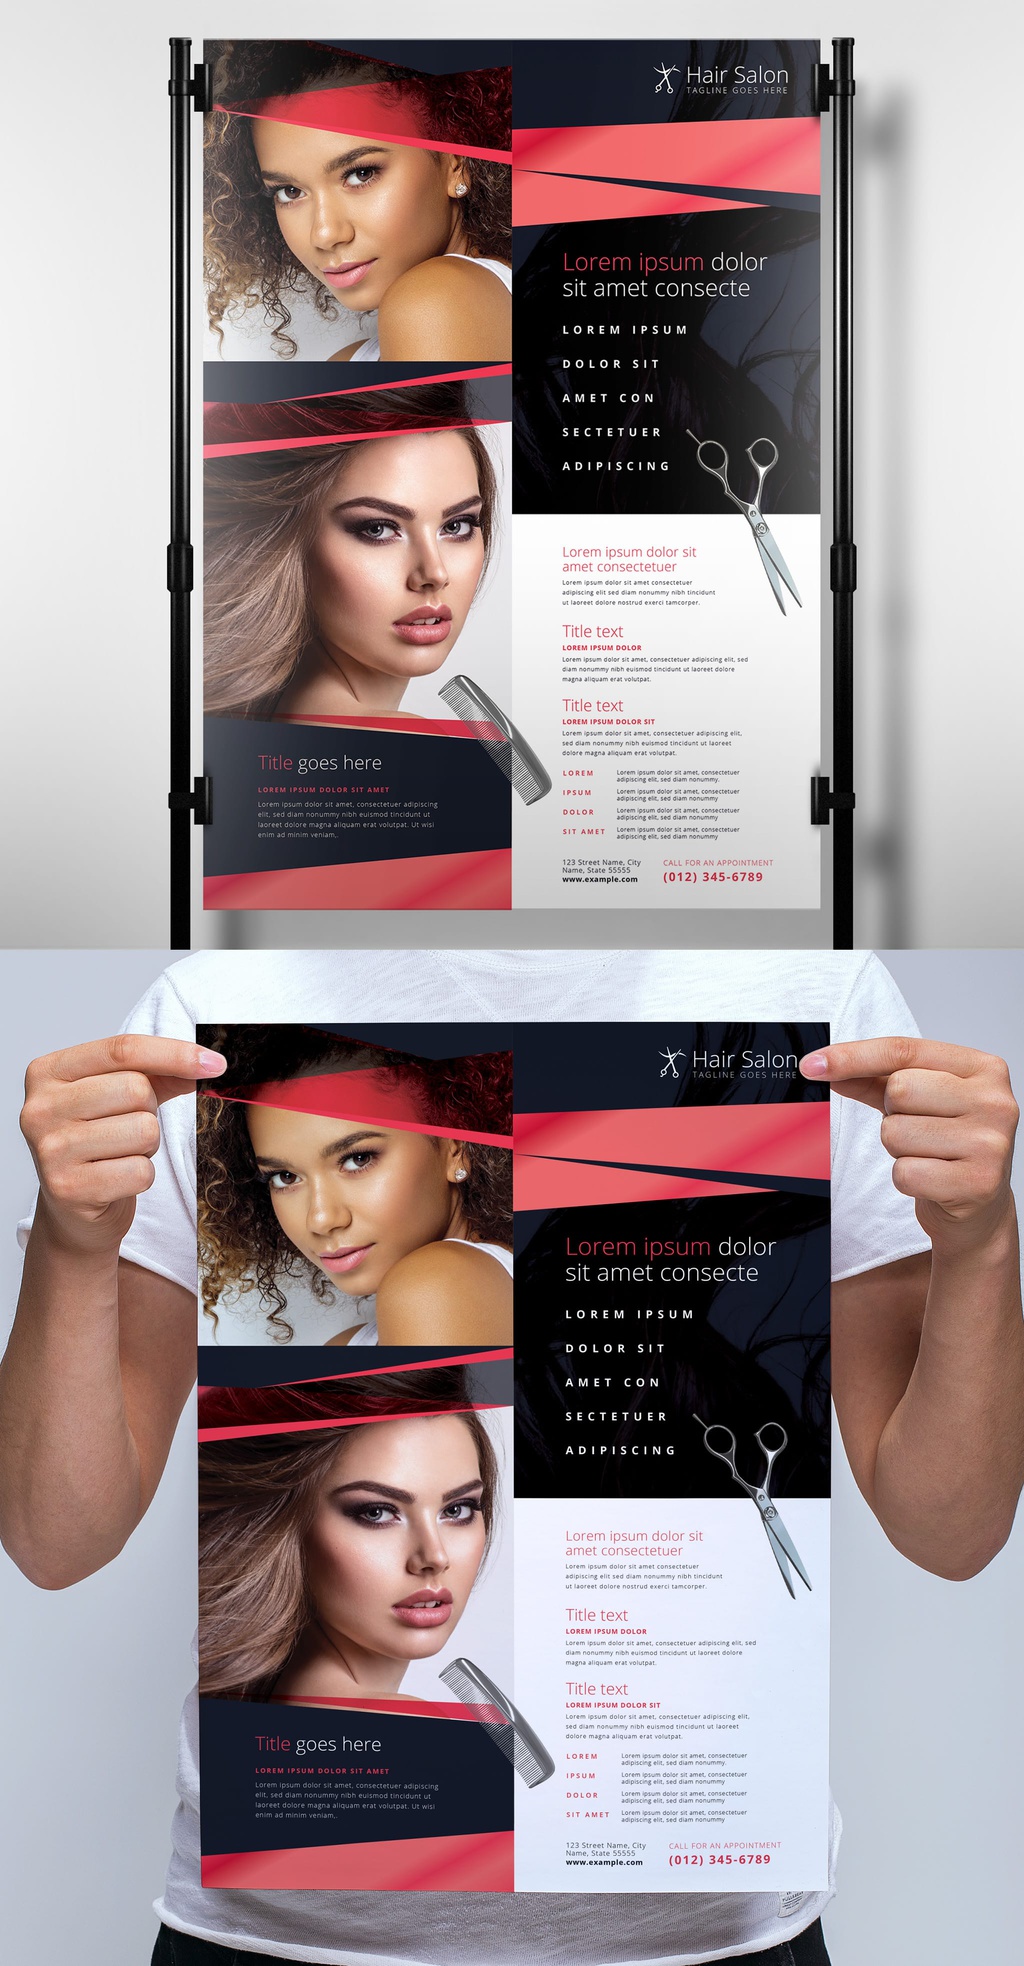 Hair Salon Banner Templates – Browse 6 Stock Photos, Vectors, and Video |  Adobe Stock